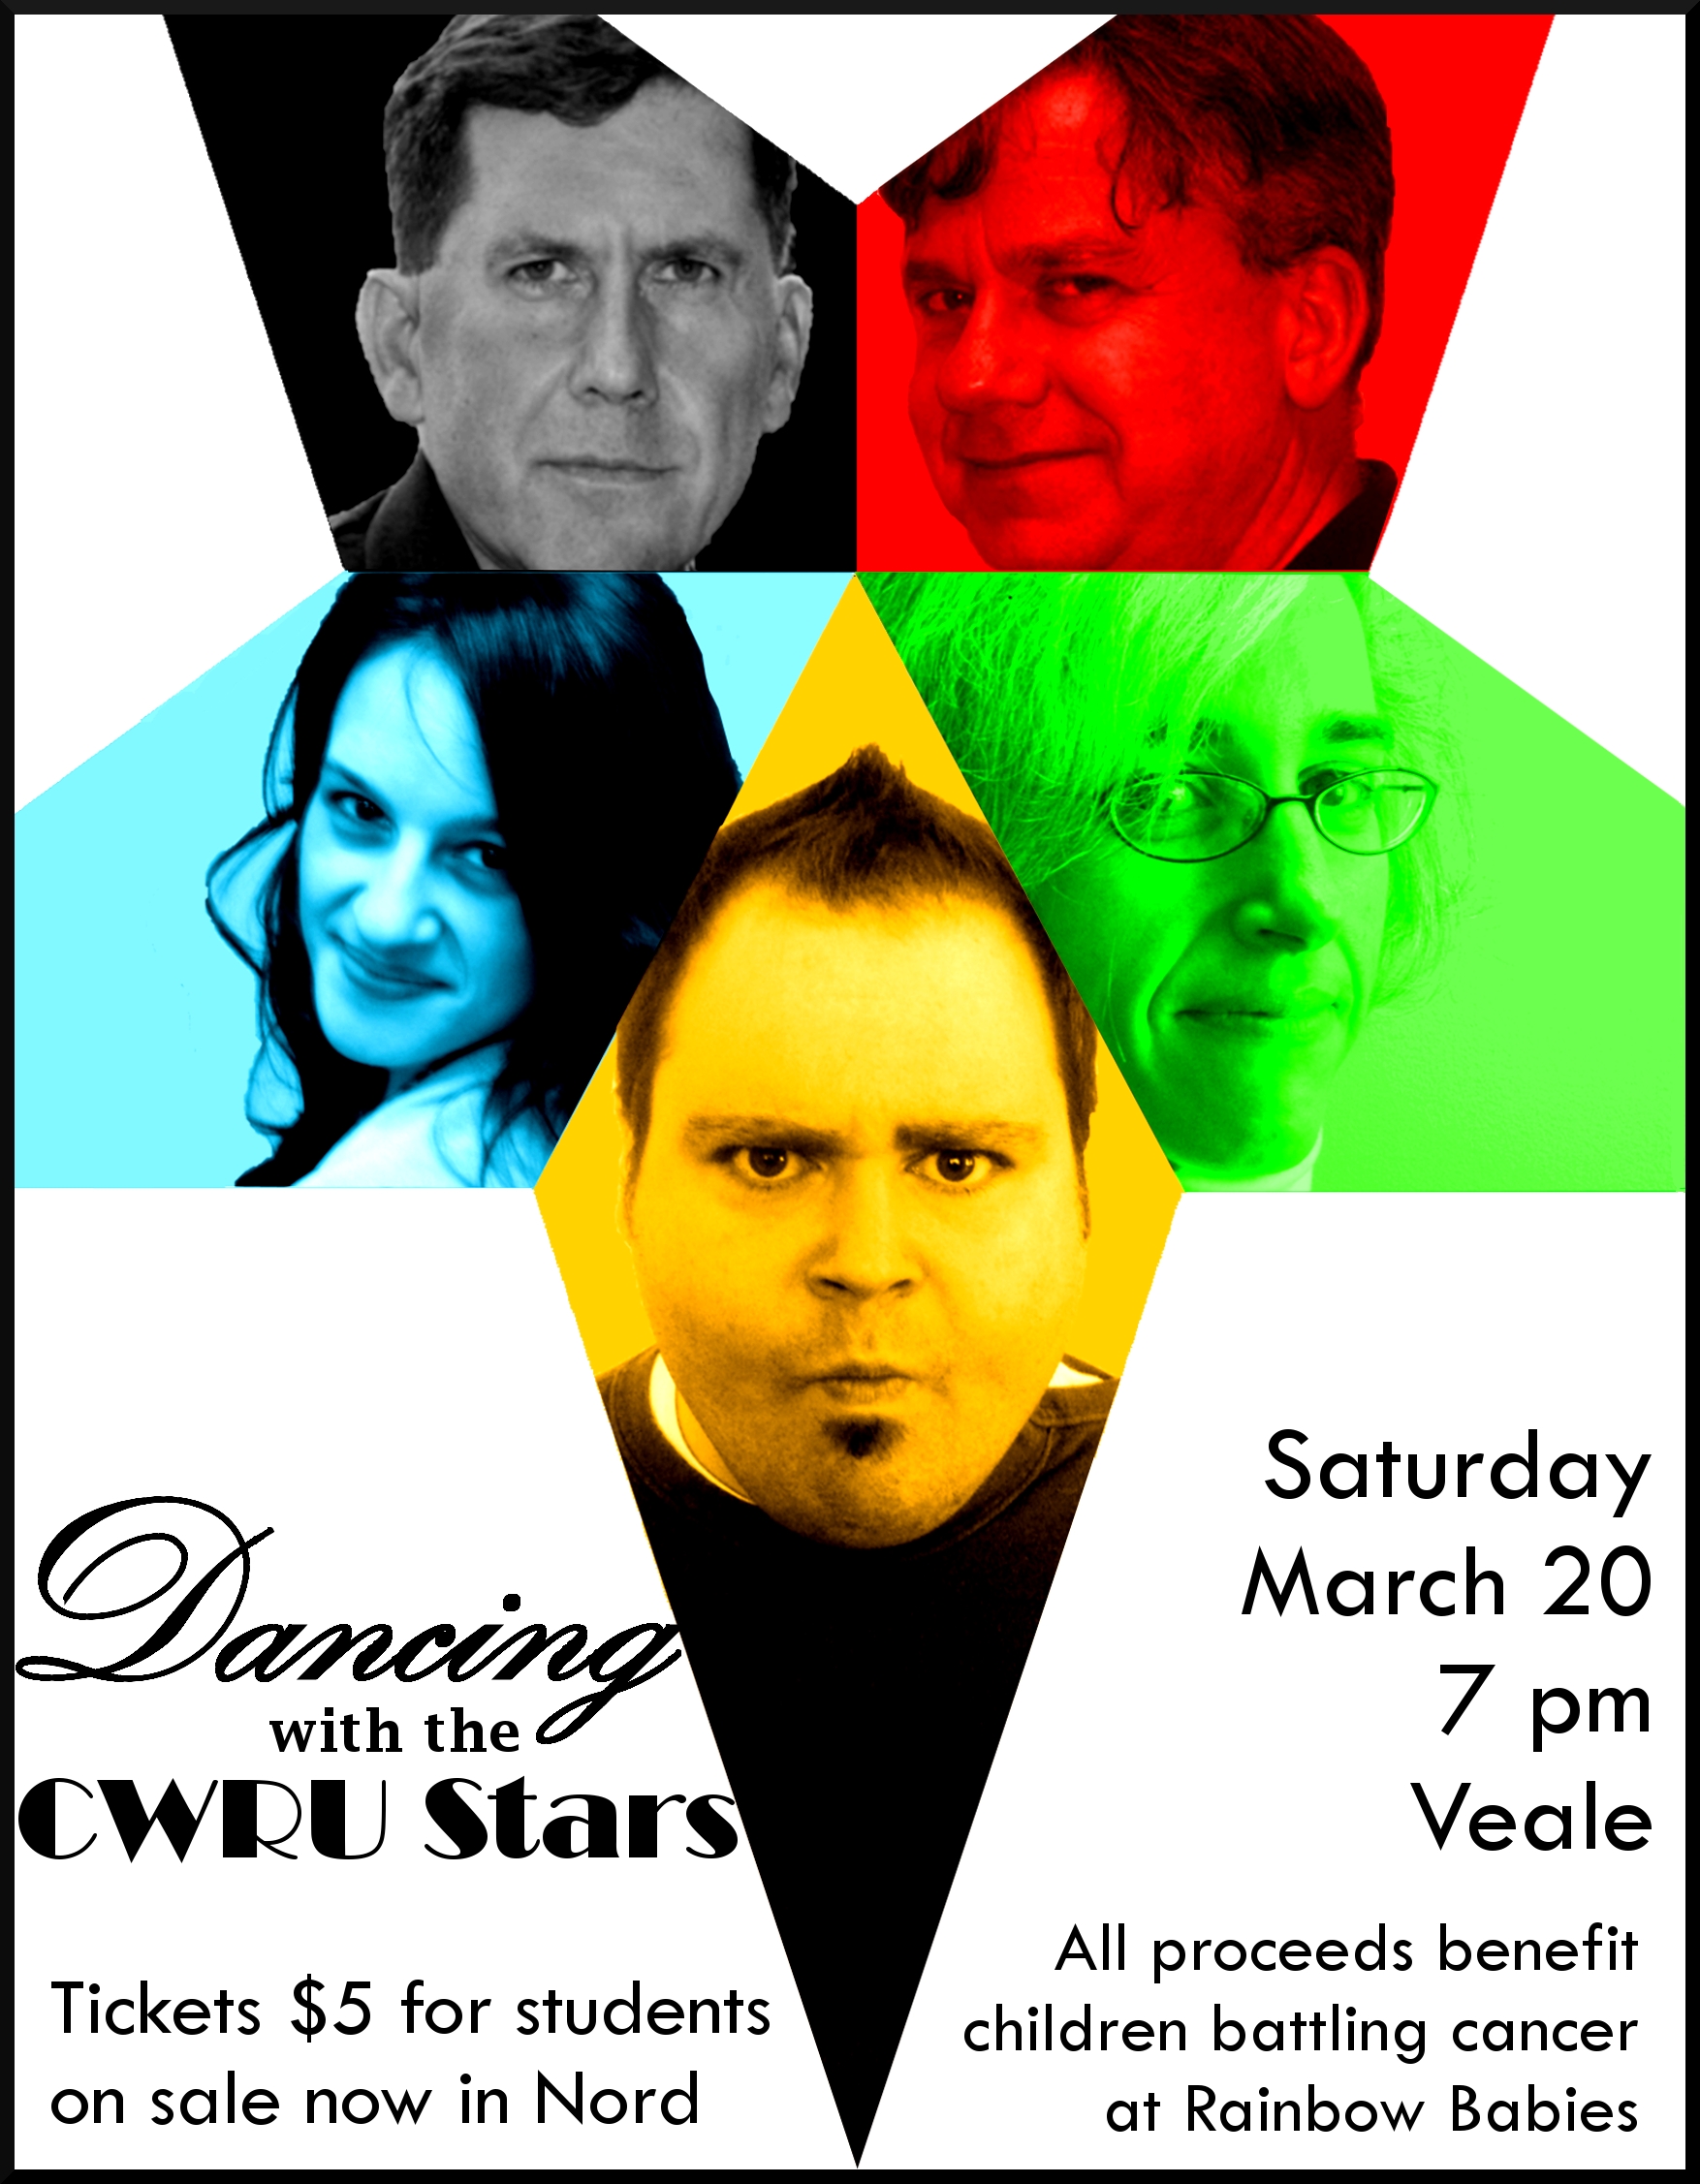 dance marathon at case western reserve university dancing with the CWRU stars trek poster